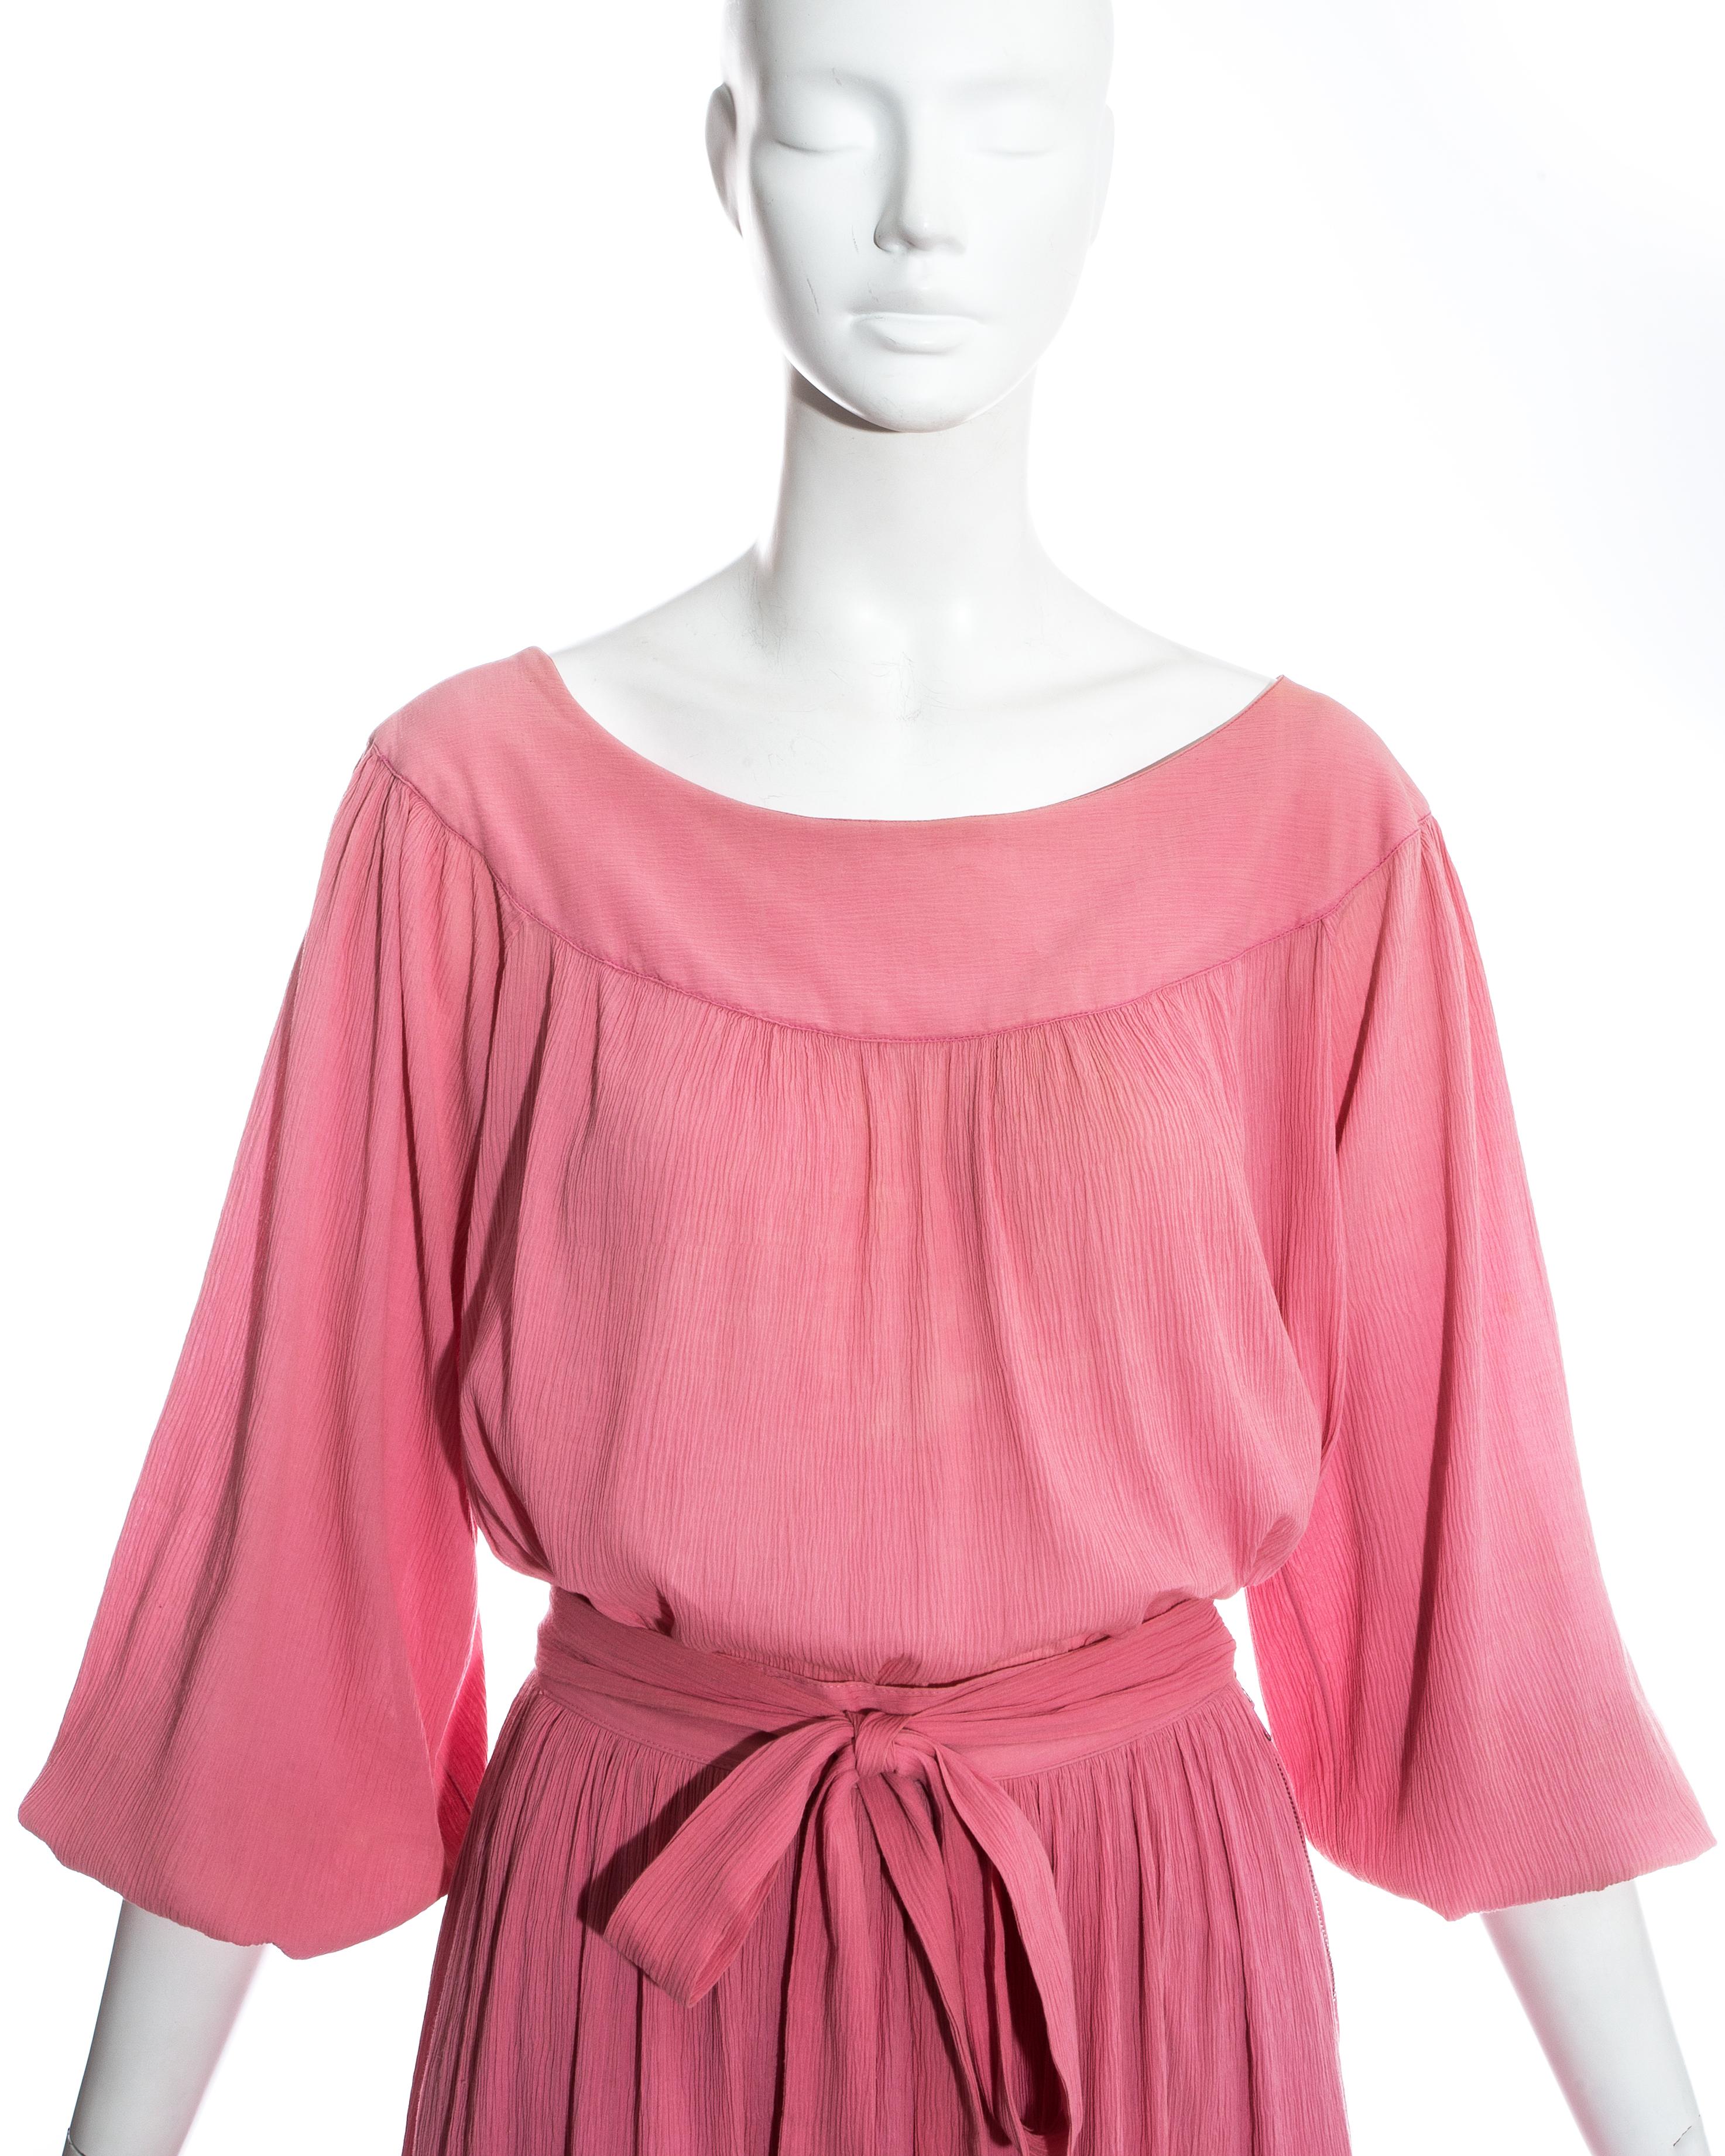 Pink Yves Saint Laurent pink crinkled silk blouse and skirt set, c. 1970s